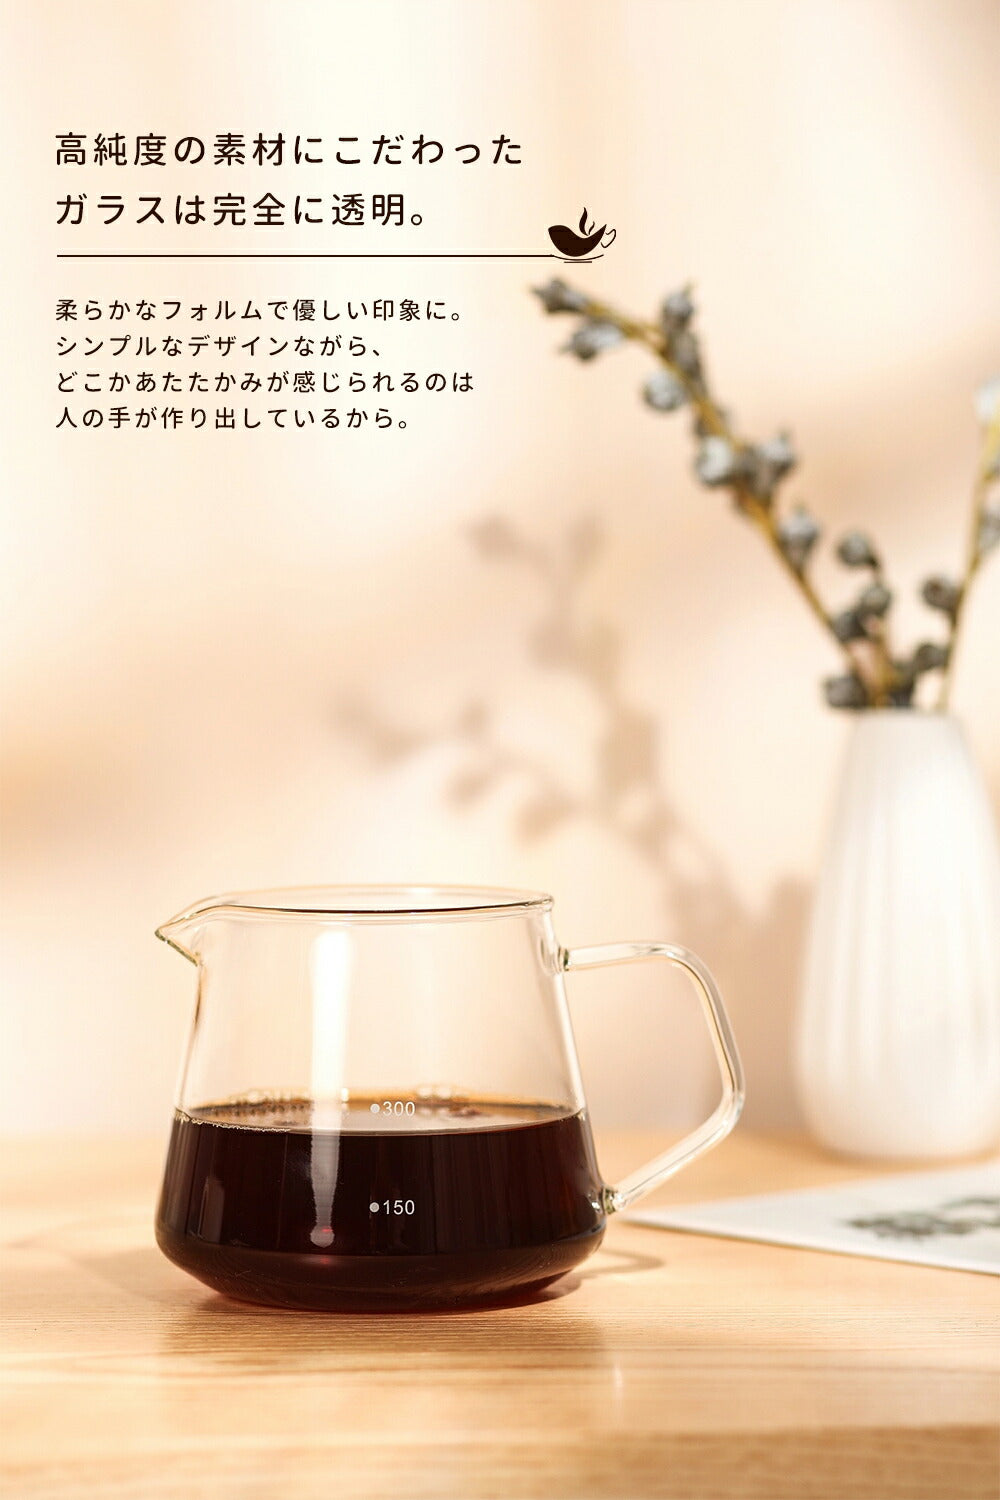 IwaiLoft コーヒーサーバー ガラスドリッパー セット コーヒーポット V60 コーヒードリッパー 耐熱ガラス ２cup ハンドドリッパー ドリッパーコーヒー コーヒー用品 珈琲 コーヒー器具 おしゃれ 北欧 母の日 父の日 プレゼント